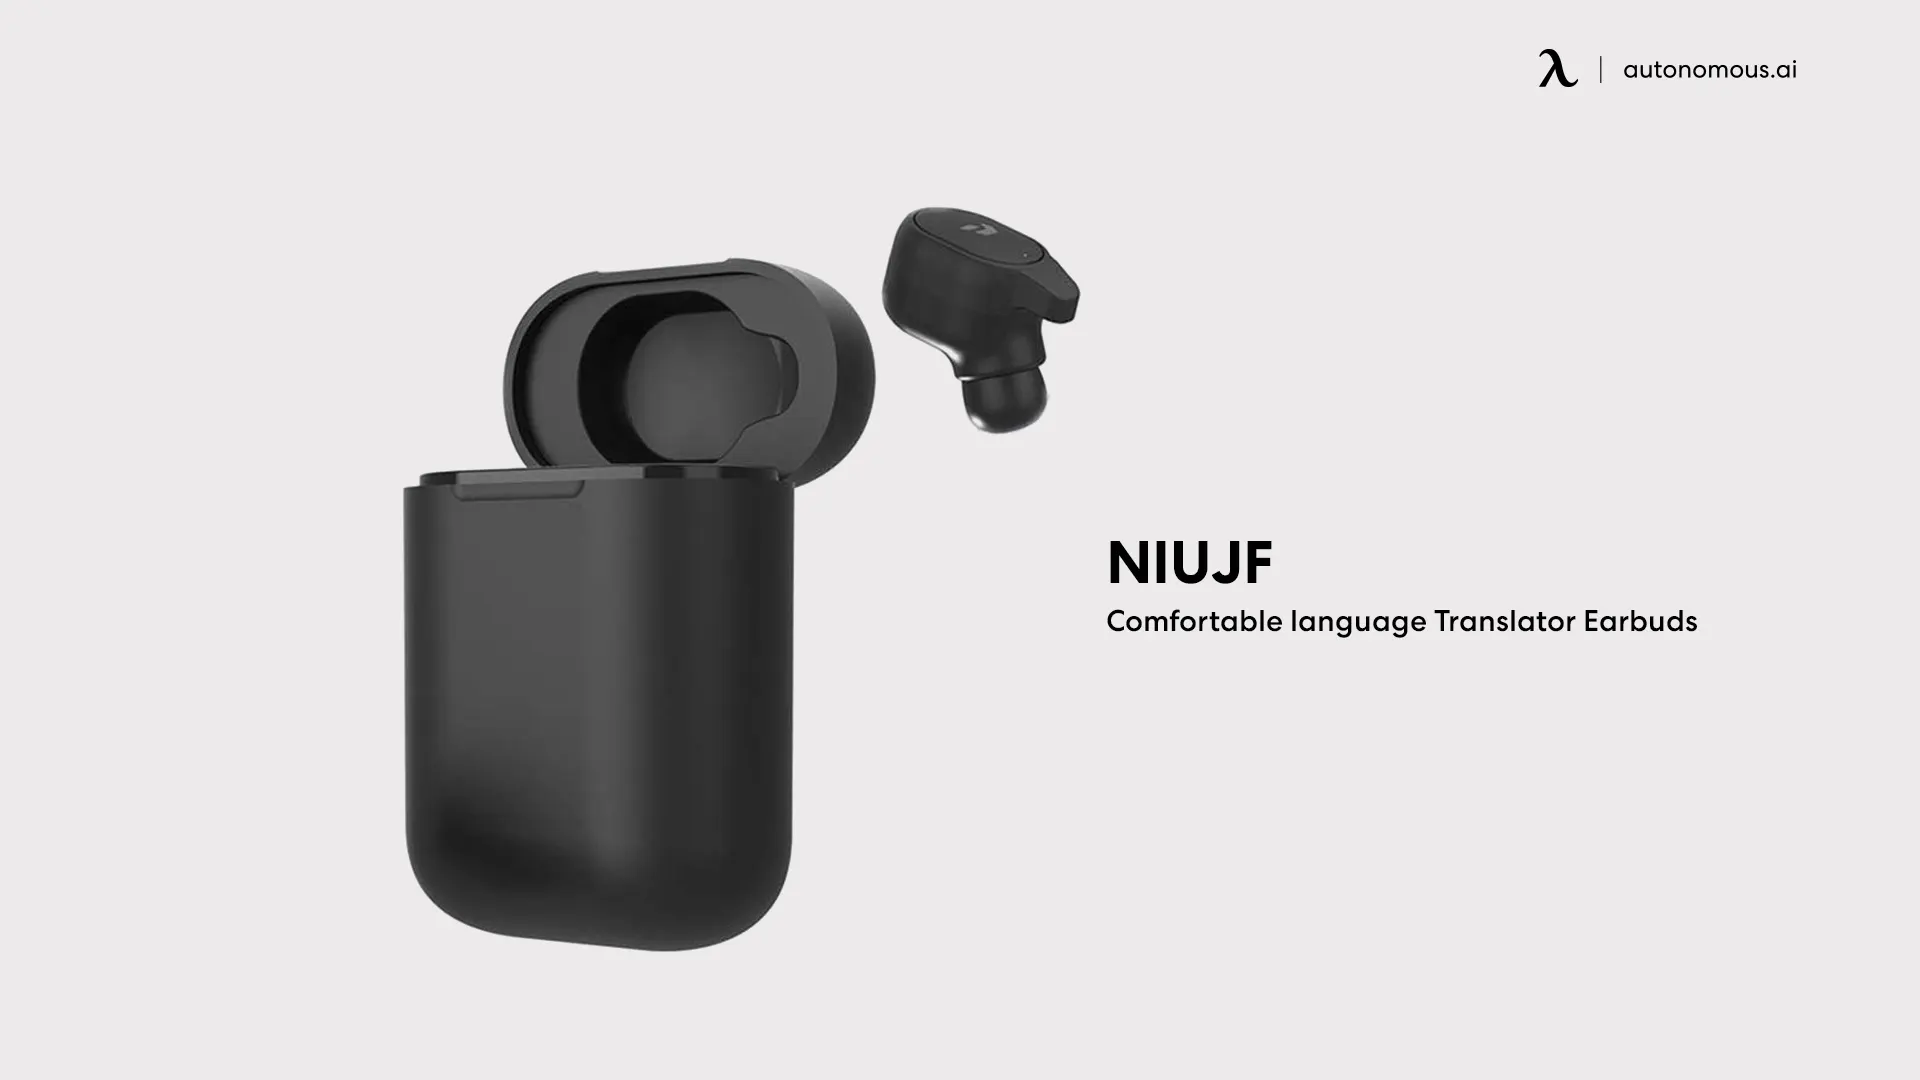 NIUJF Comfortable language Translator Earbuds